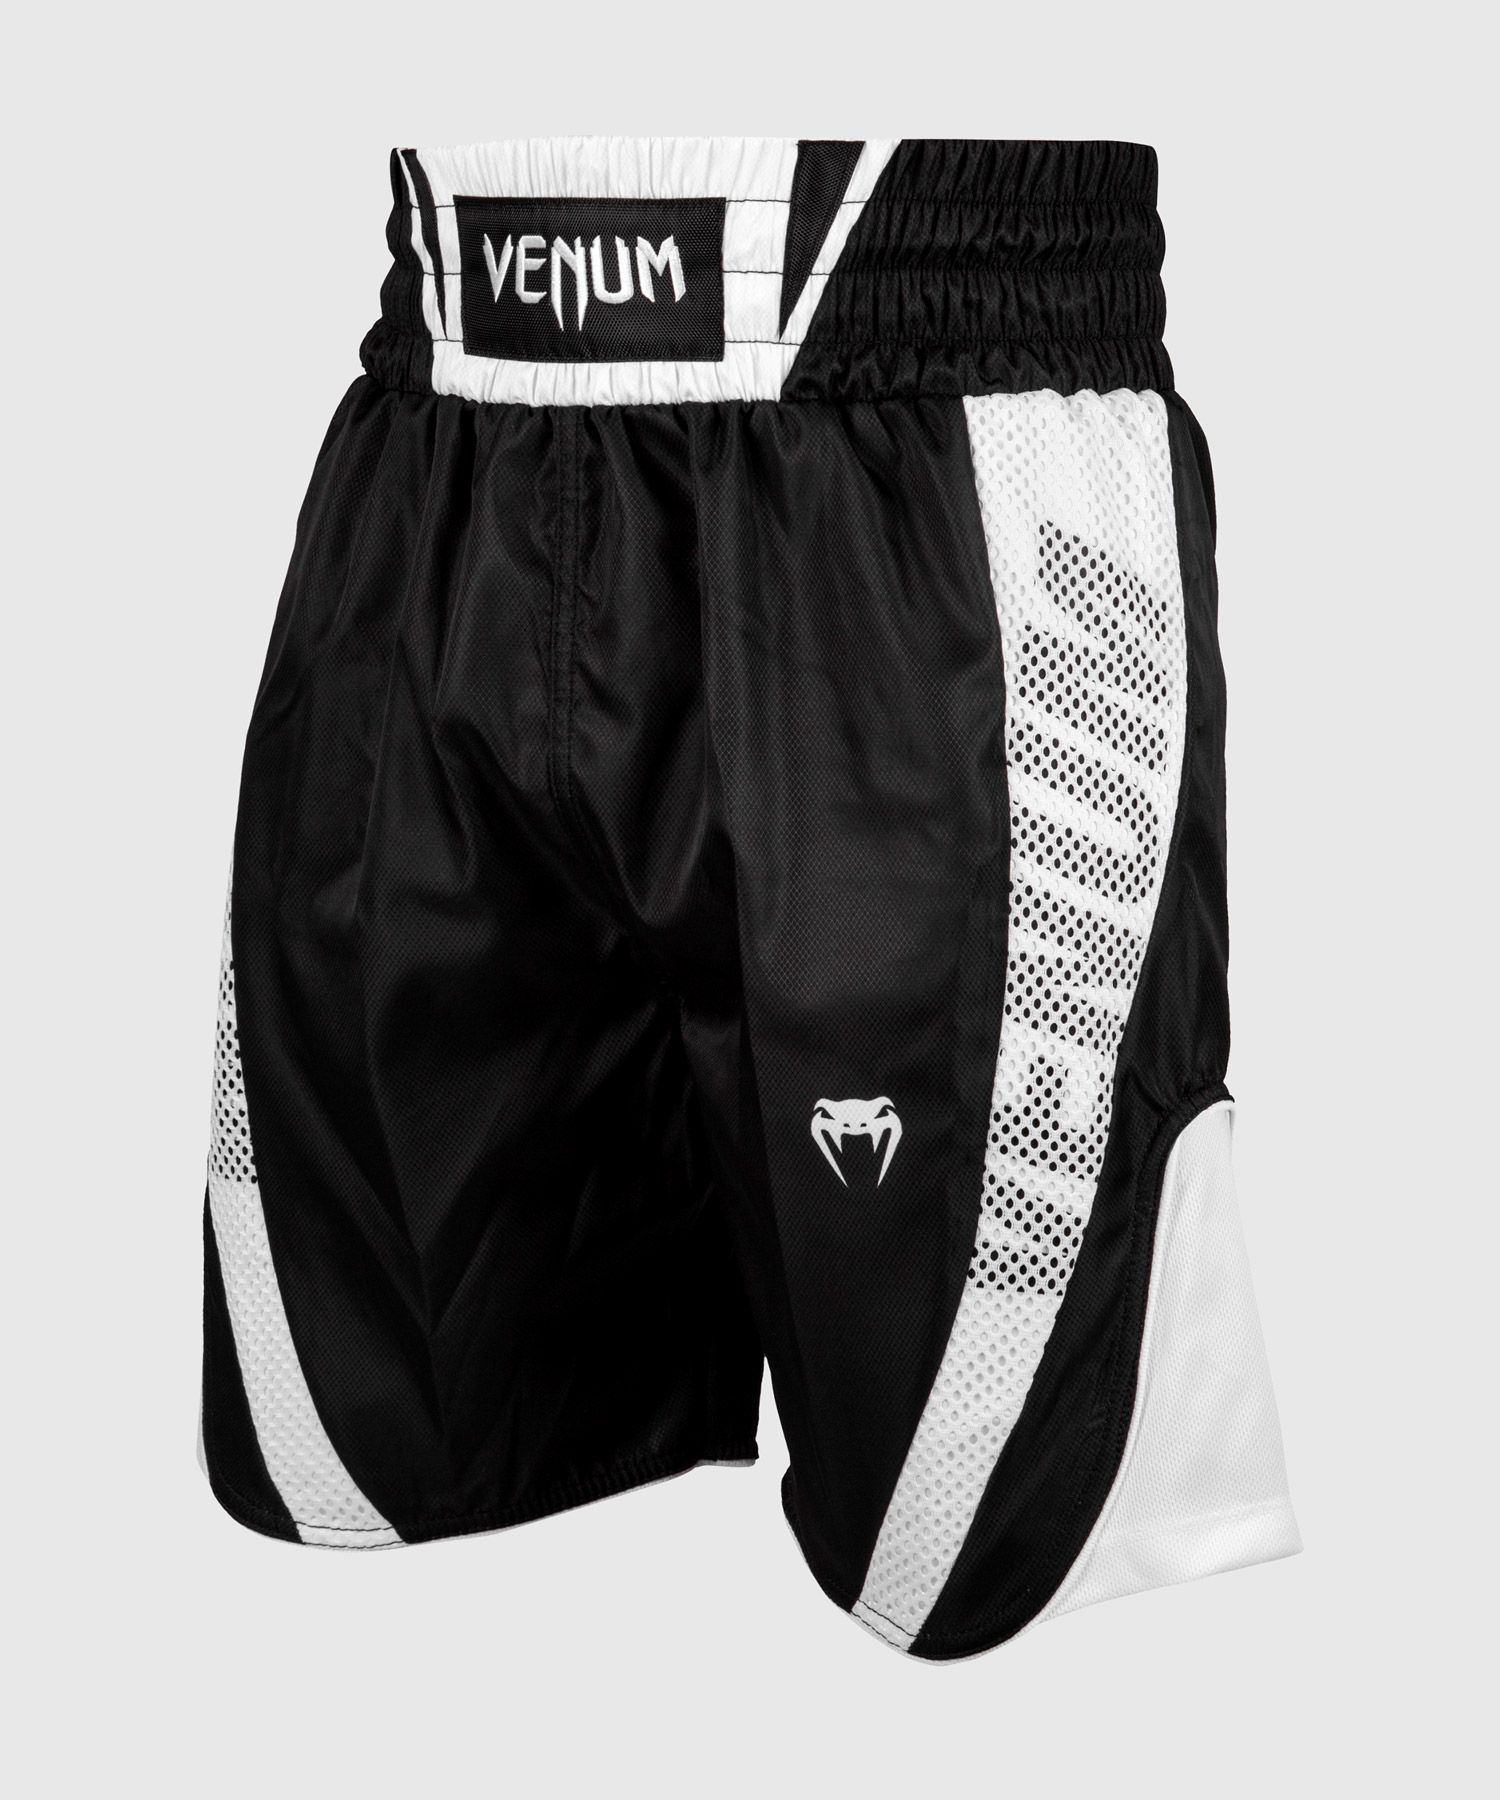 Venum Elite Boxing Shorts - Black/White